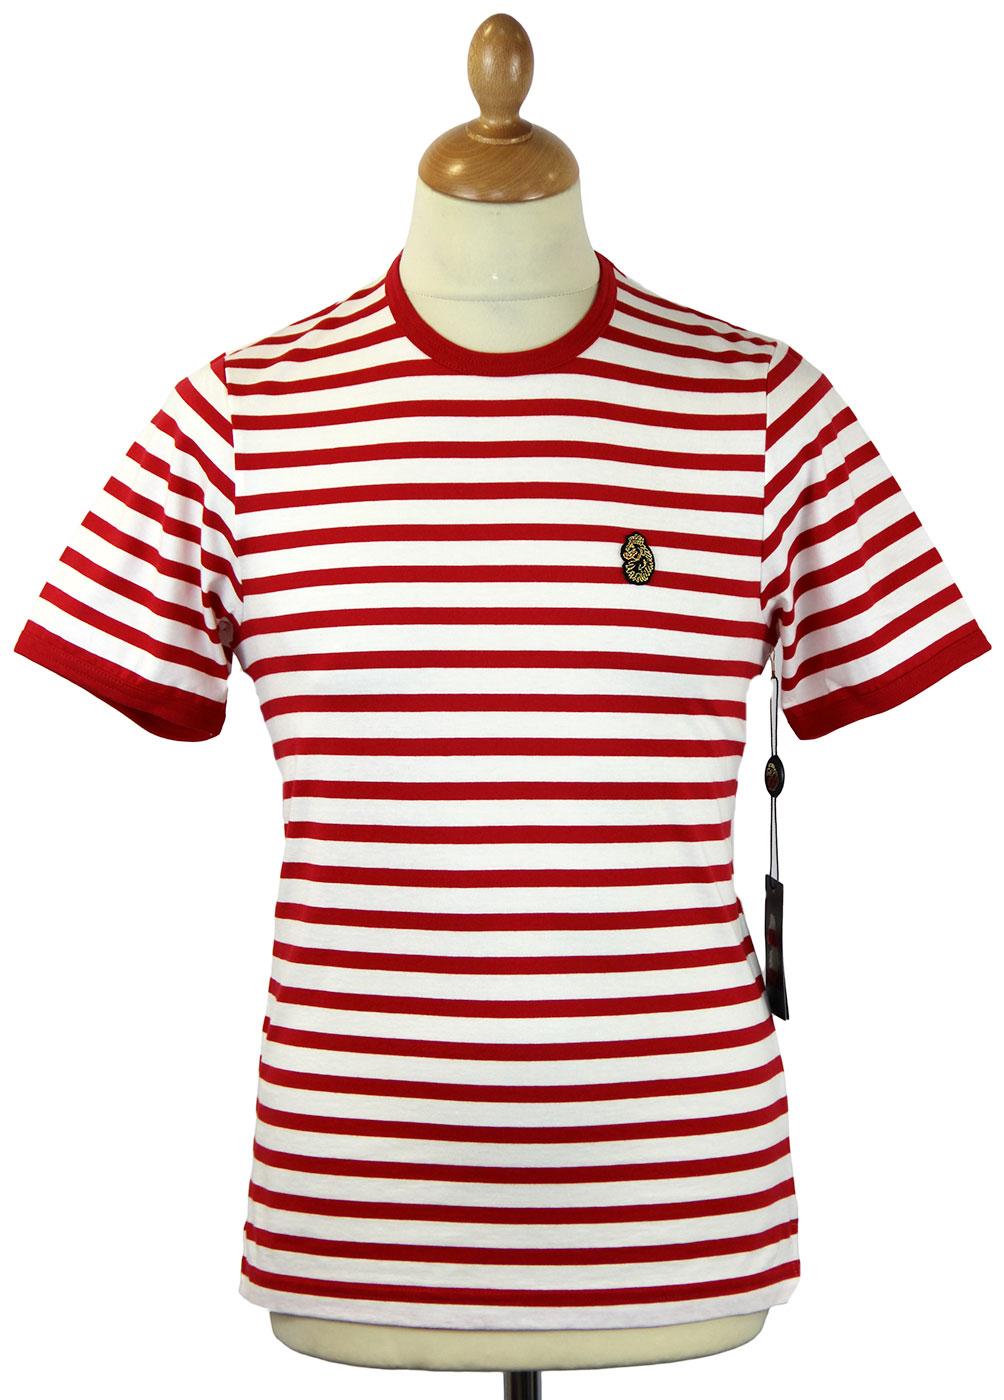 Pekker LUKE 1977 Retro Mod Breton Stripe T-Shirt R